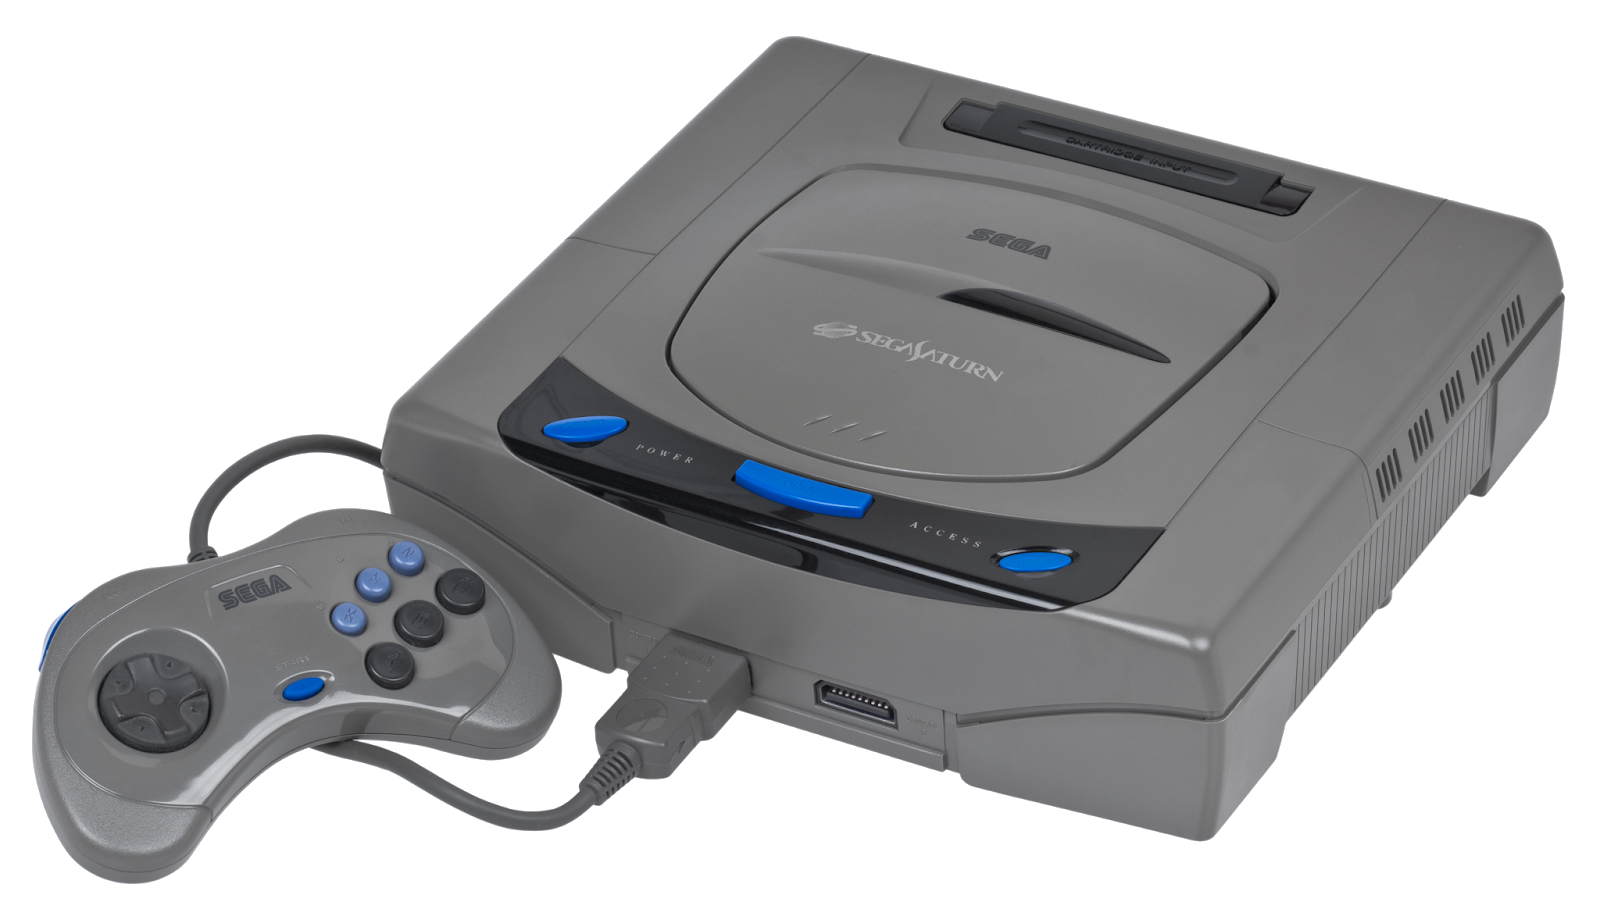 Sega Saturn 1st gen control Pad Für Saturn - PAL : : Games